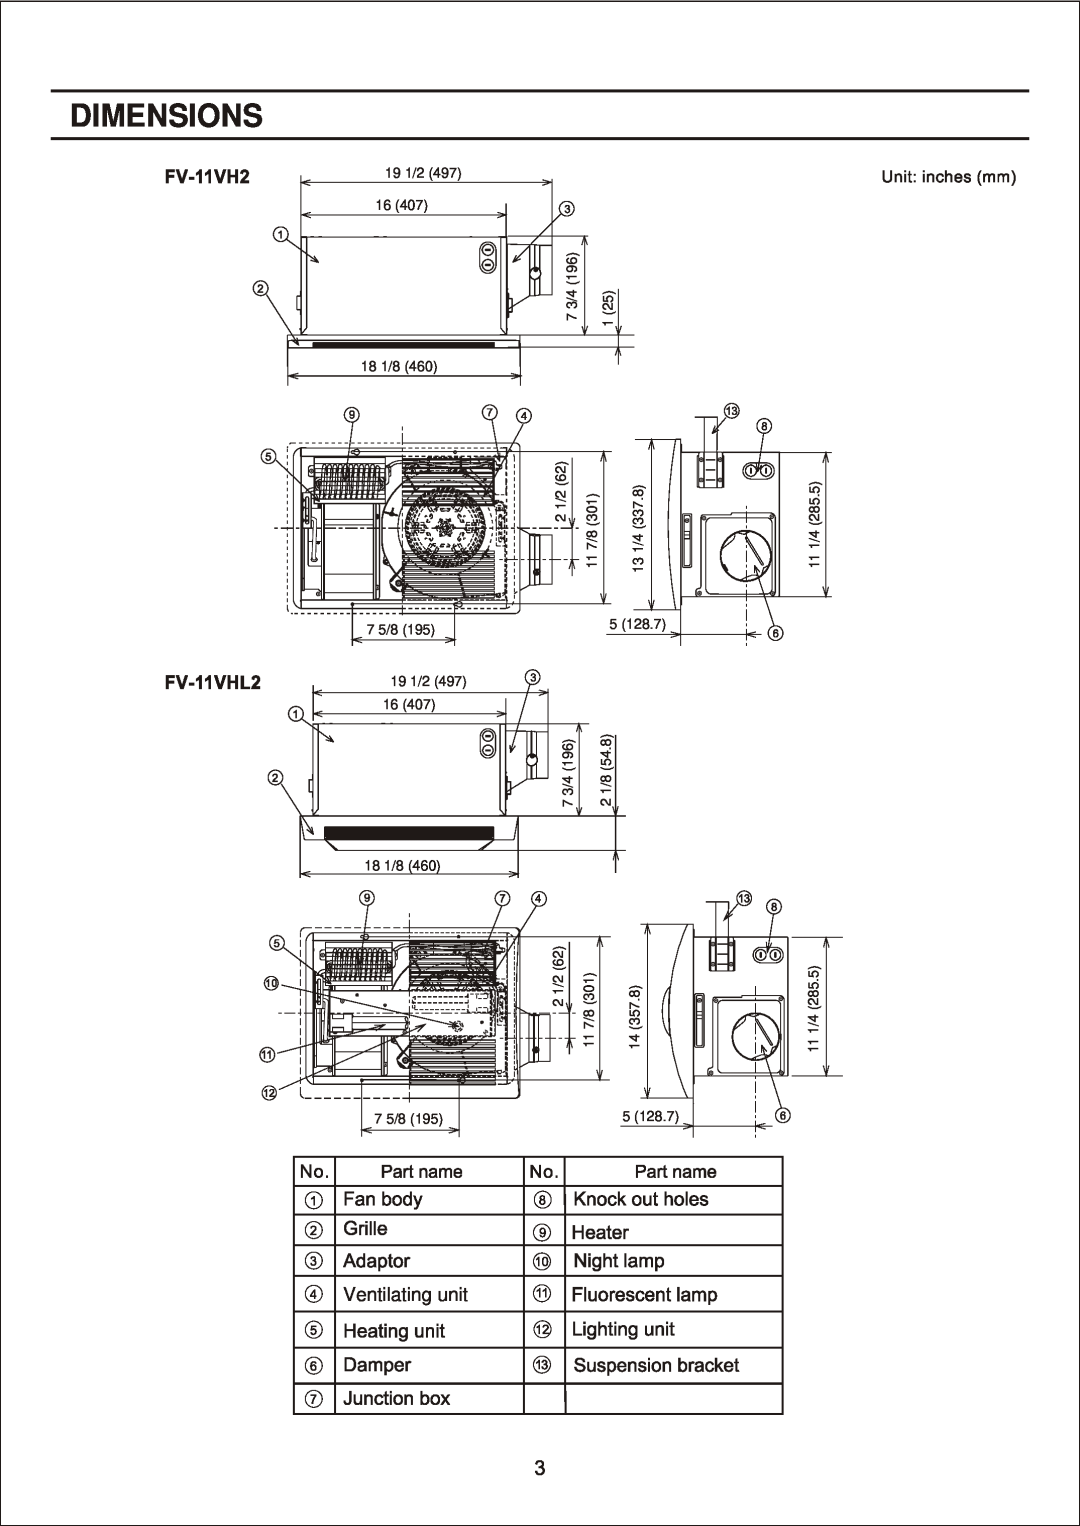 Panasonic FV-11VH2 manual Dimensions, Ventilating unit 